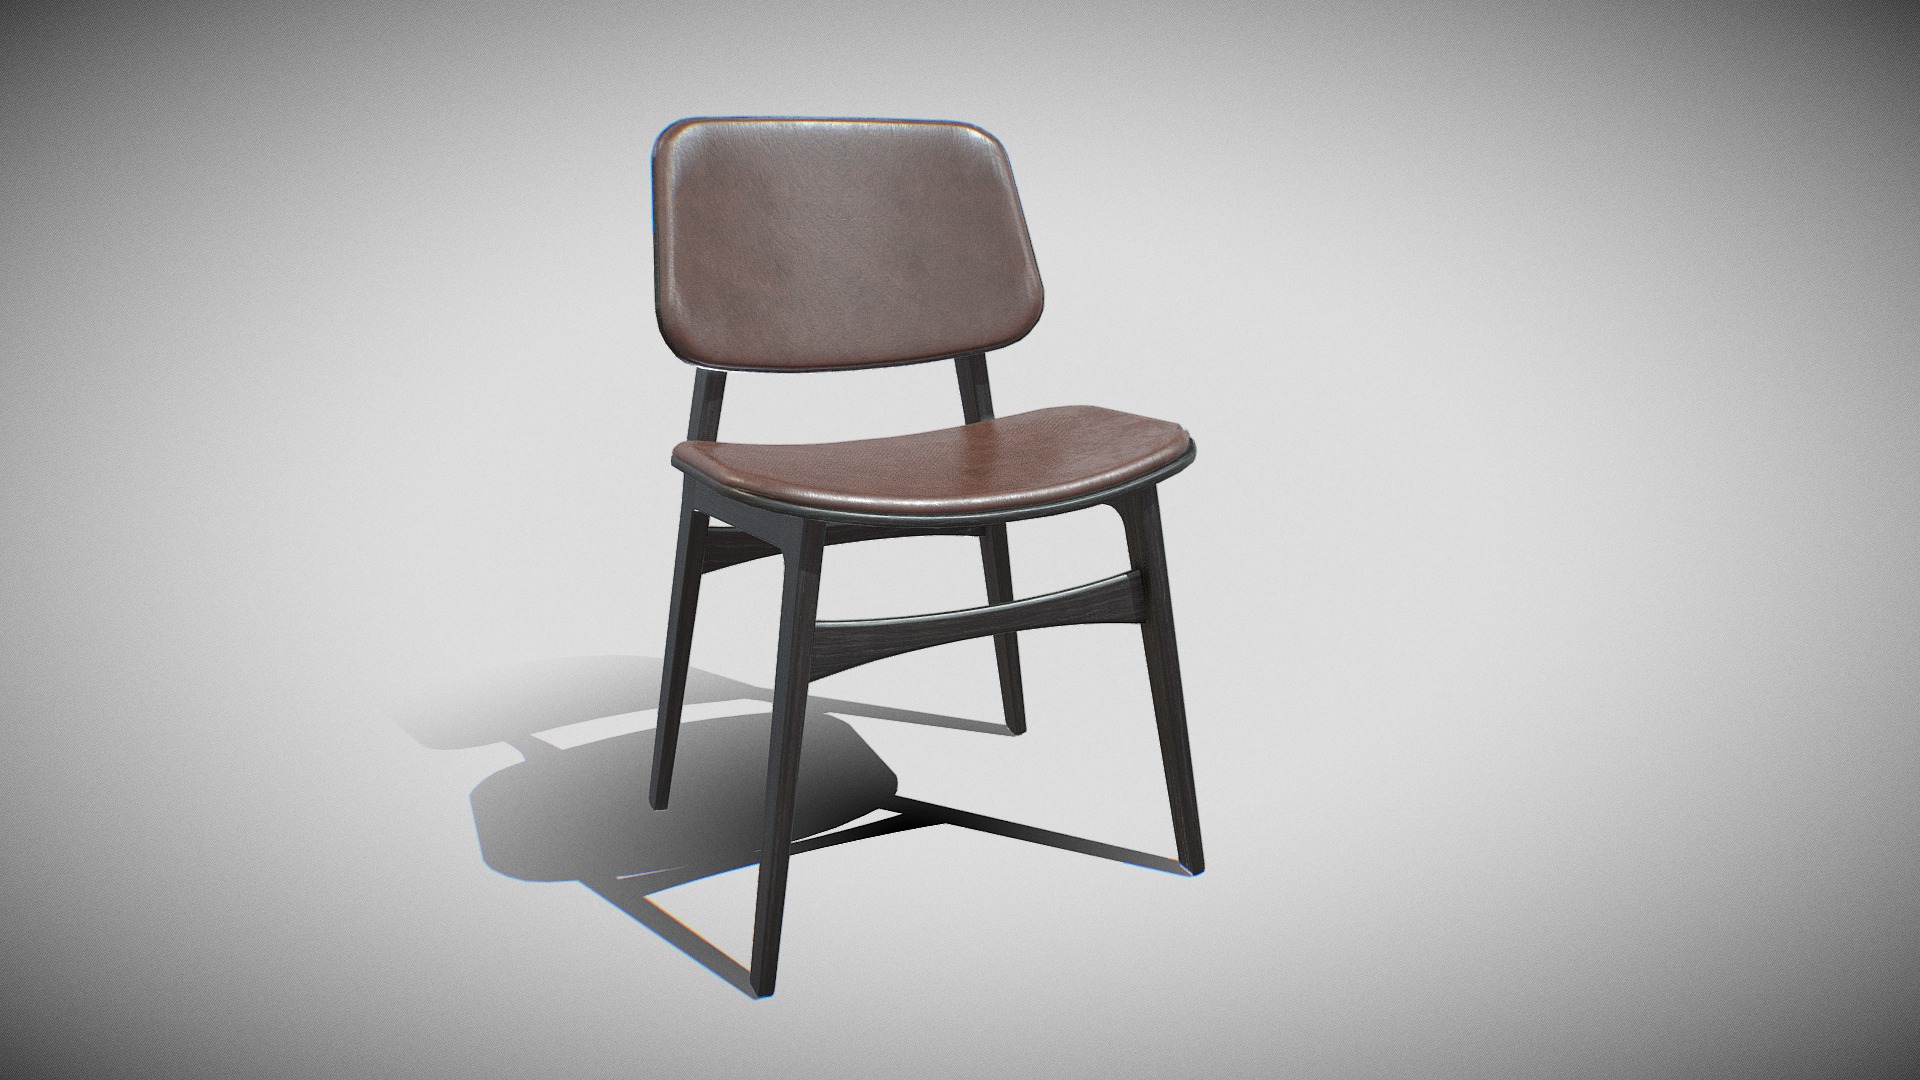 3D model Soborg Chair Model-3052-leather 96,black wood - This is a 3D model of the Soborg Chair Model-3052-leather 96,black wood. The 3D model is about a chair on a white background.